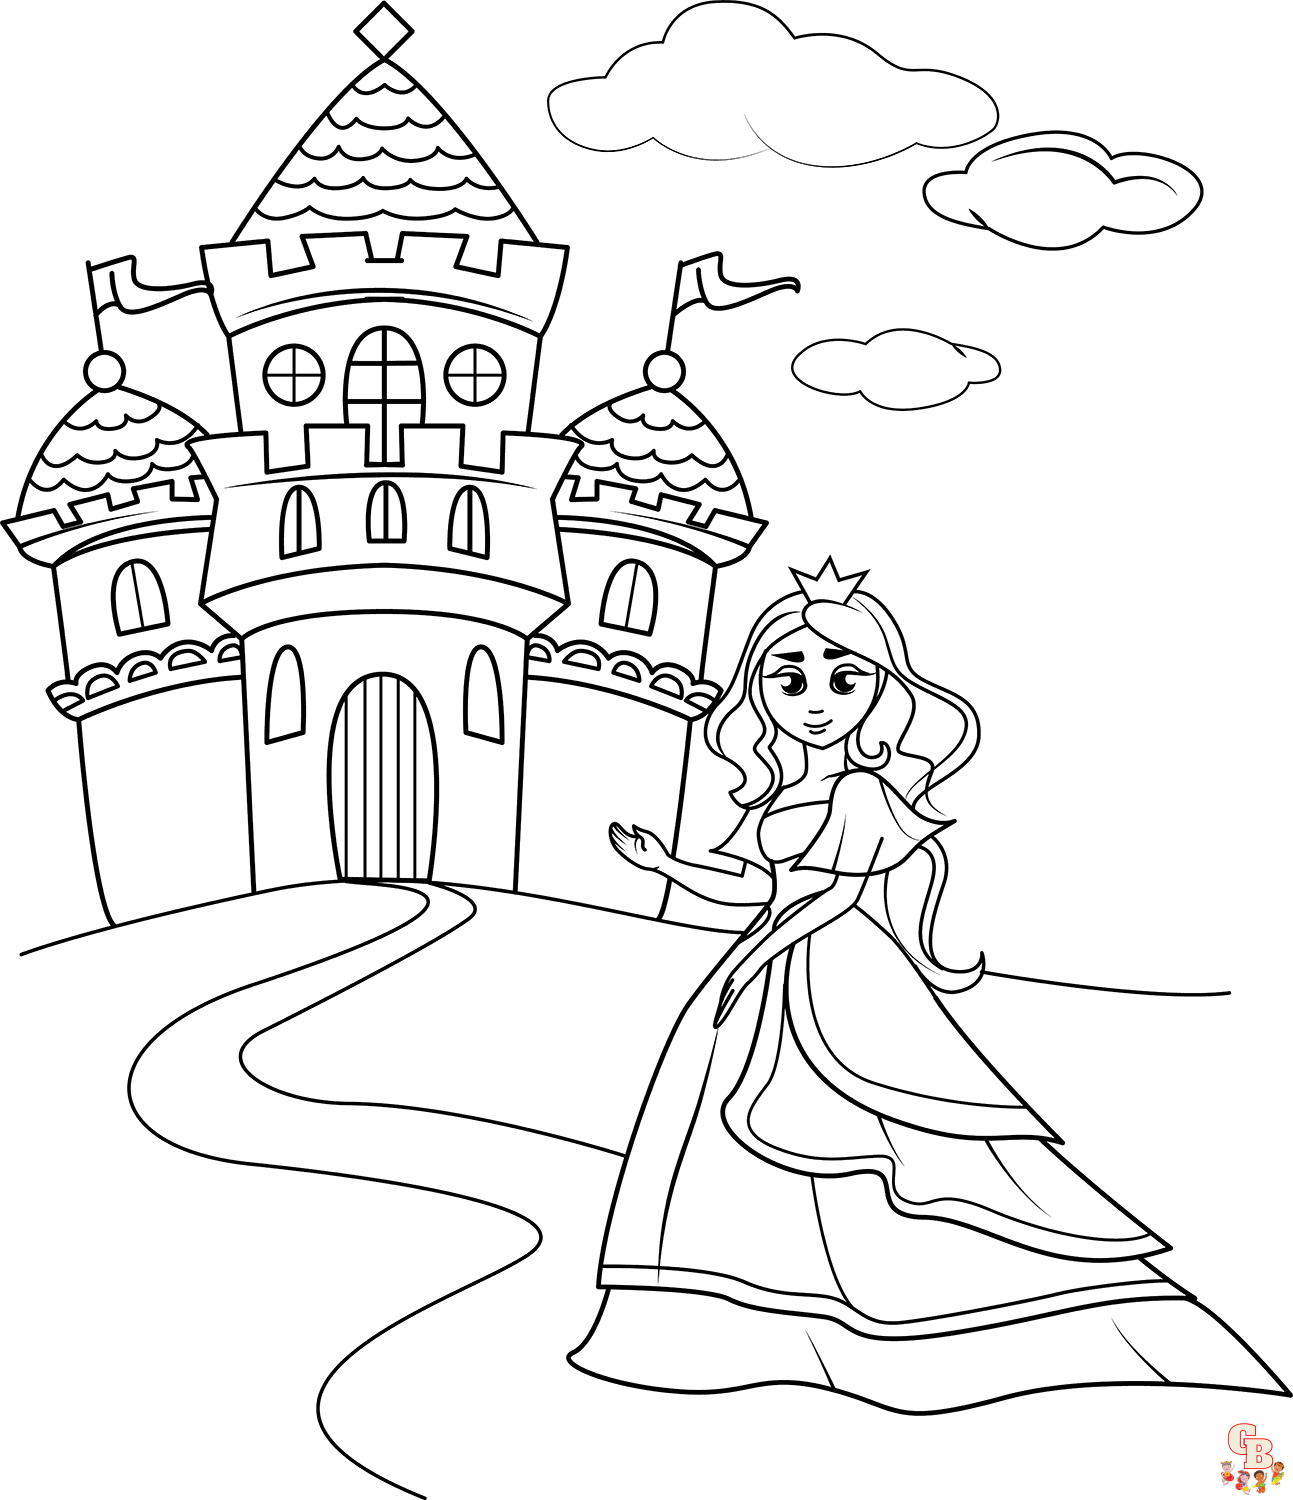 Princesa para colorir - Jogos para meninas : princesas, castelos e